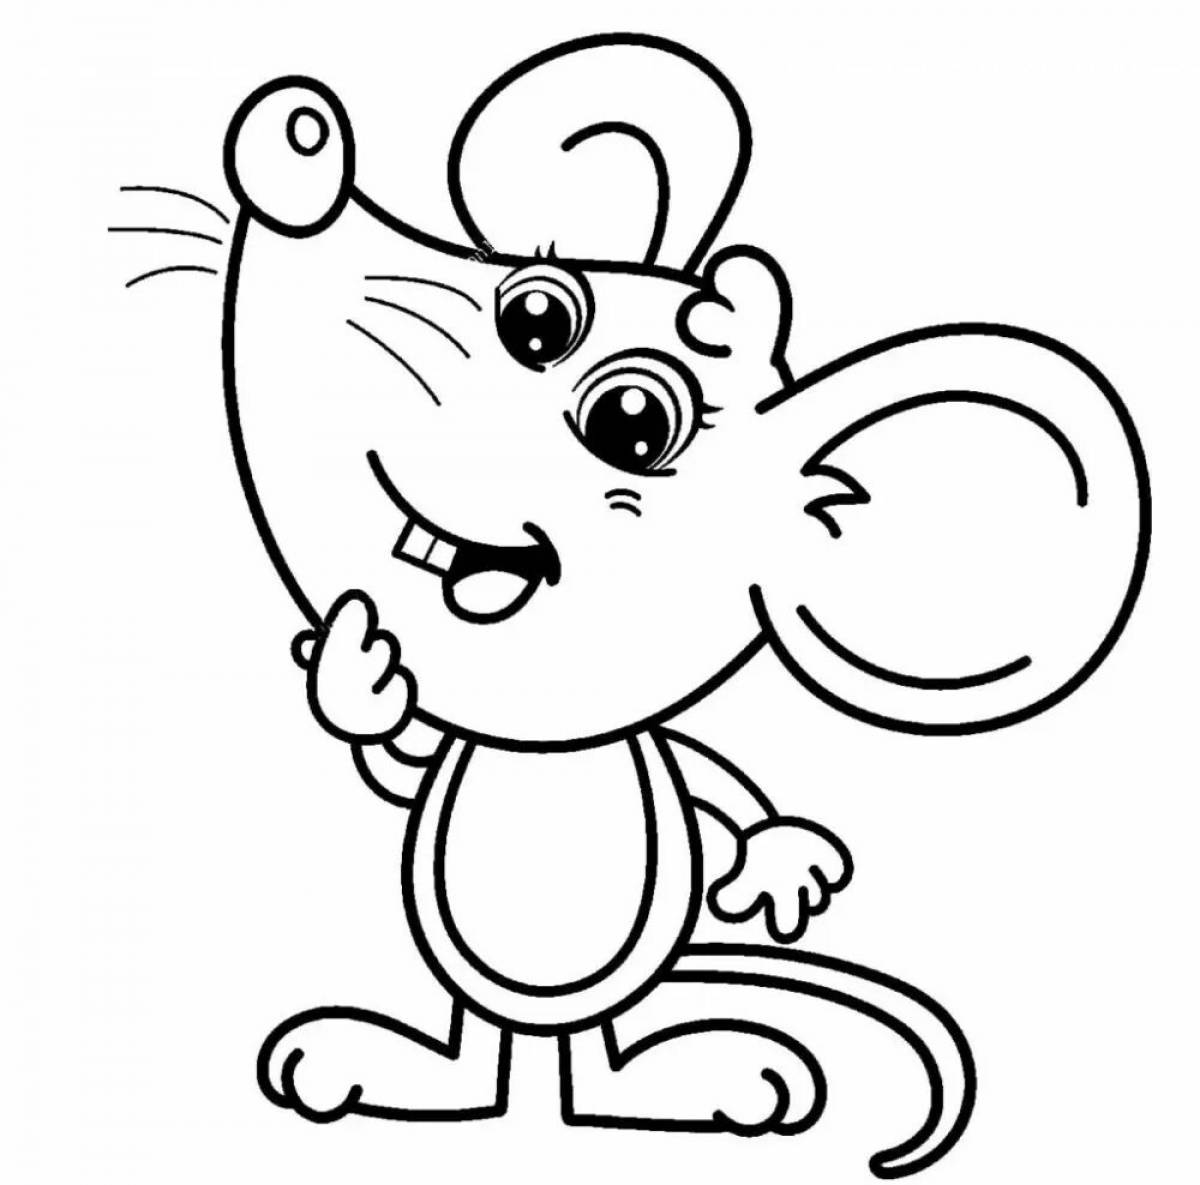 Cartoon mouse #3